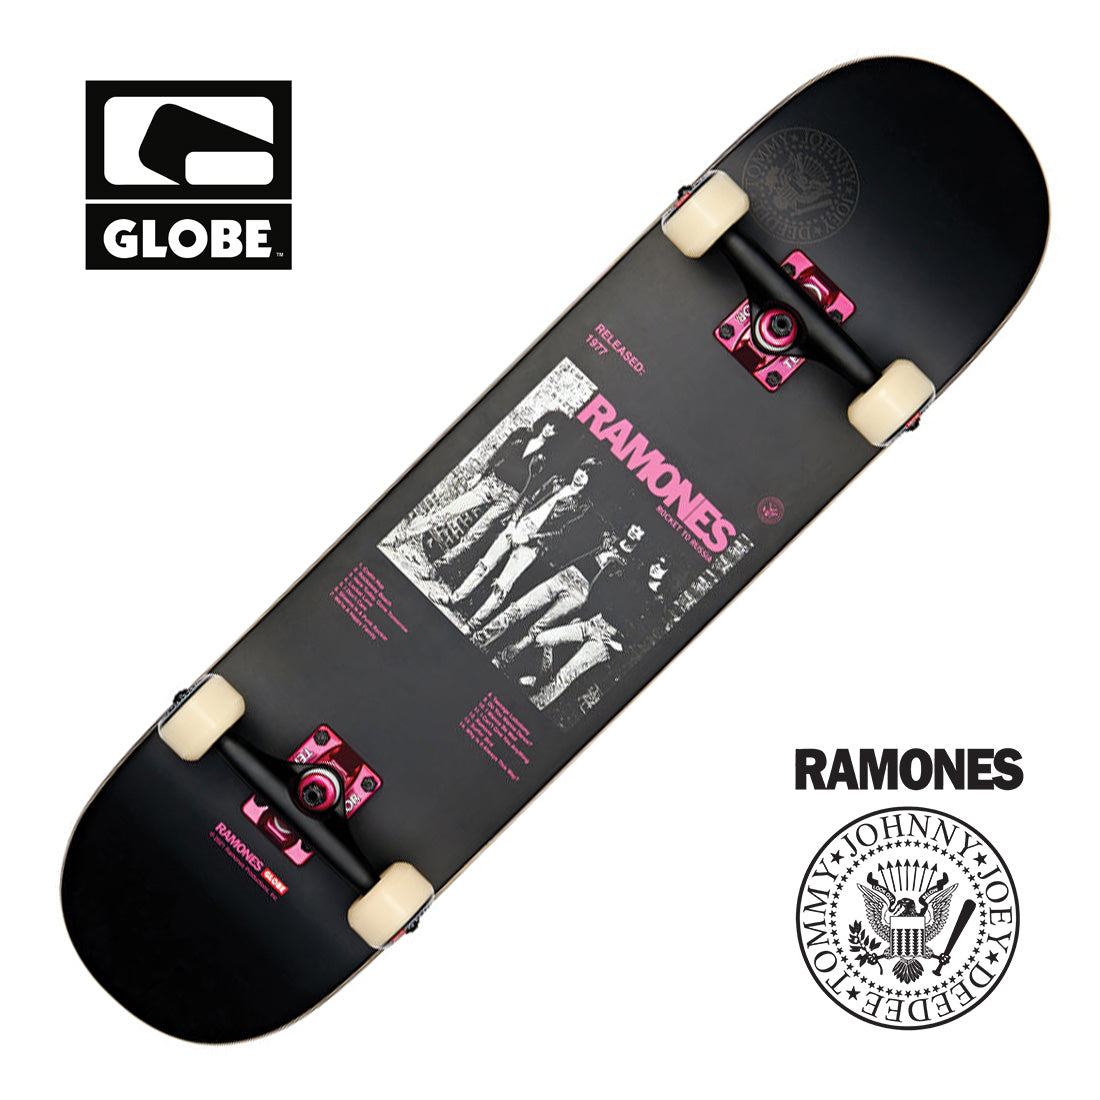 Globe G2 Ramones 8.0 Complete - Rocket to Russia Skateboard Completes Modern Street